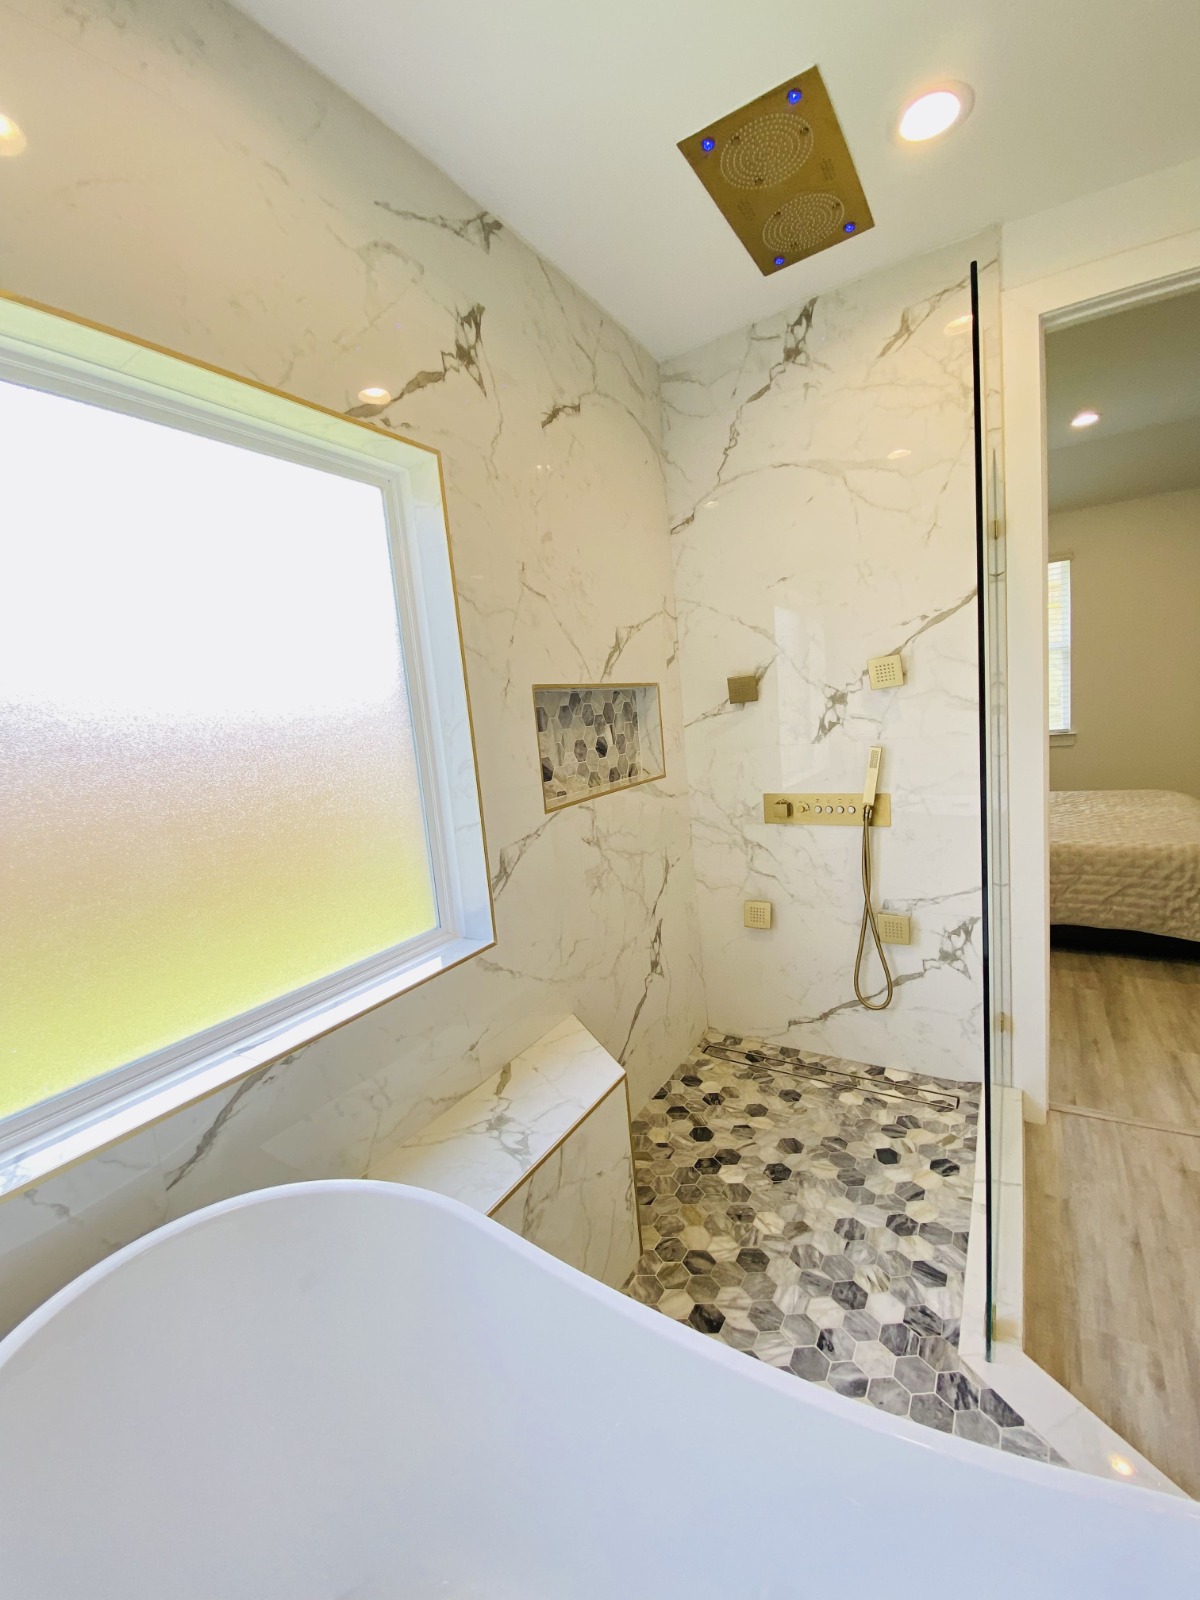 Viannis-Master-Bathroom-remodeling8